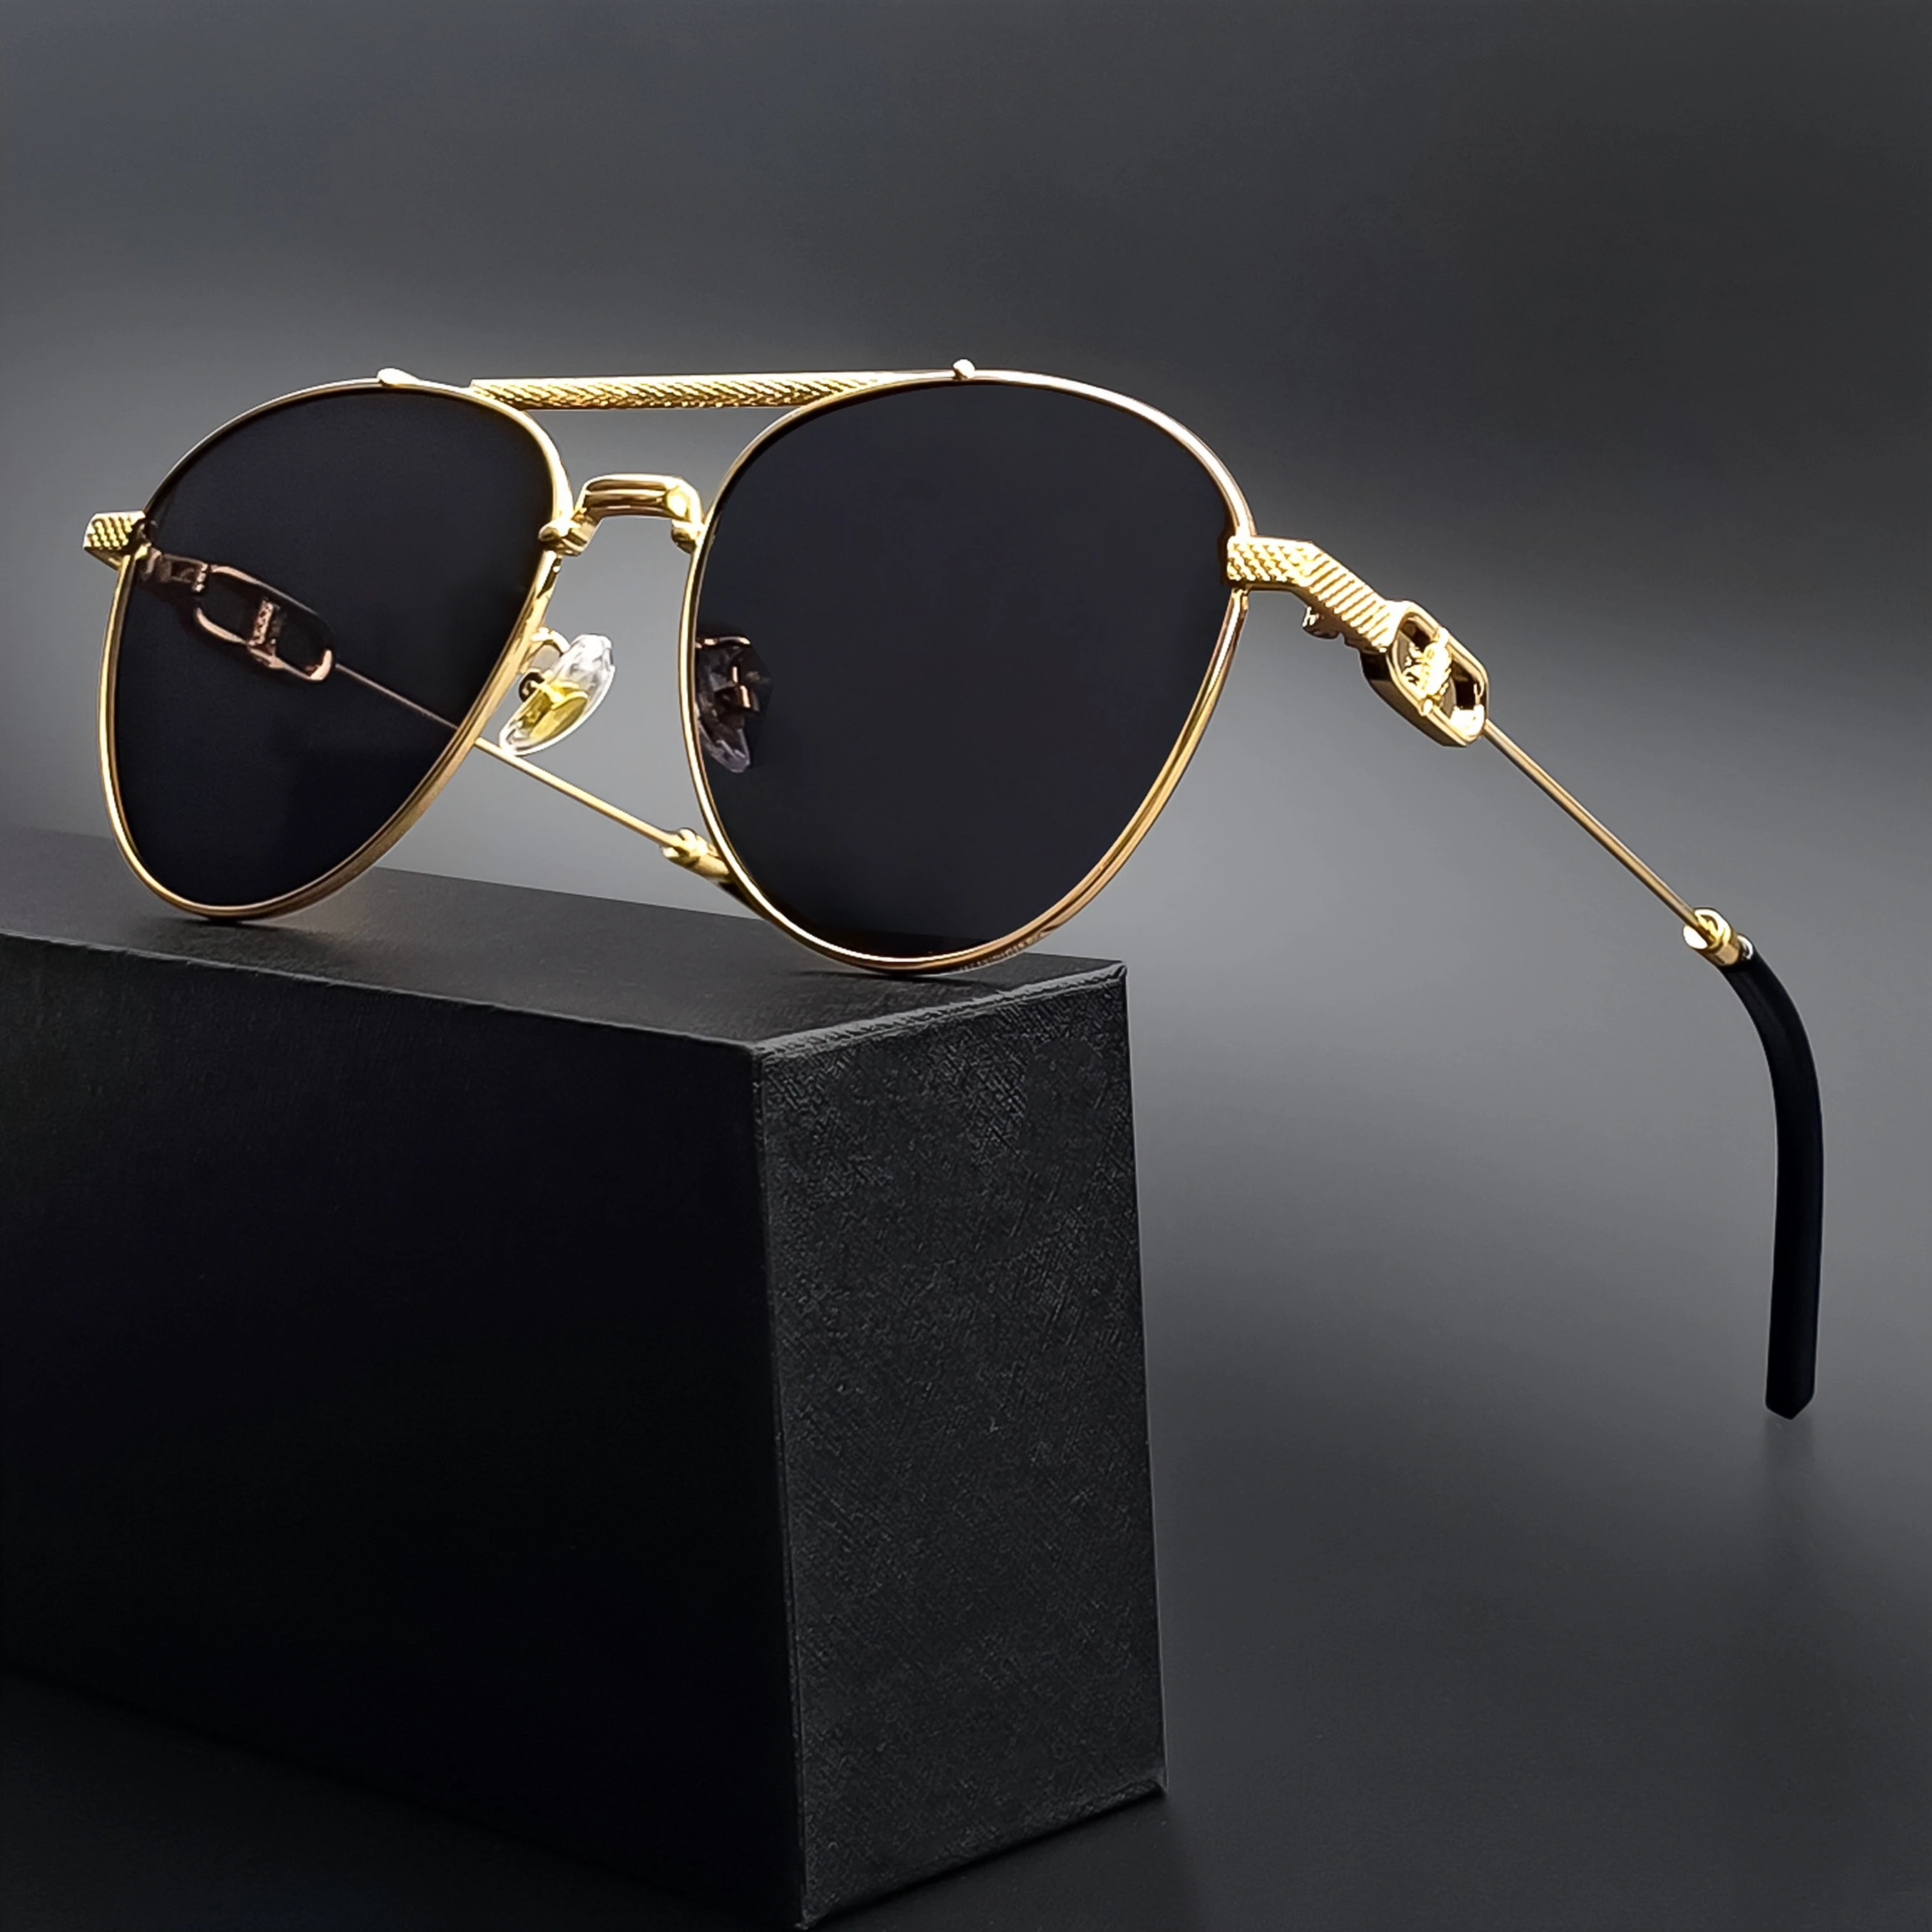 

HBK Polarized Metal Oral Sunglasses Men Big Gradient Flat Double Bridges Fashion Women's Sun Glasses Eyeglasses UV400